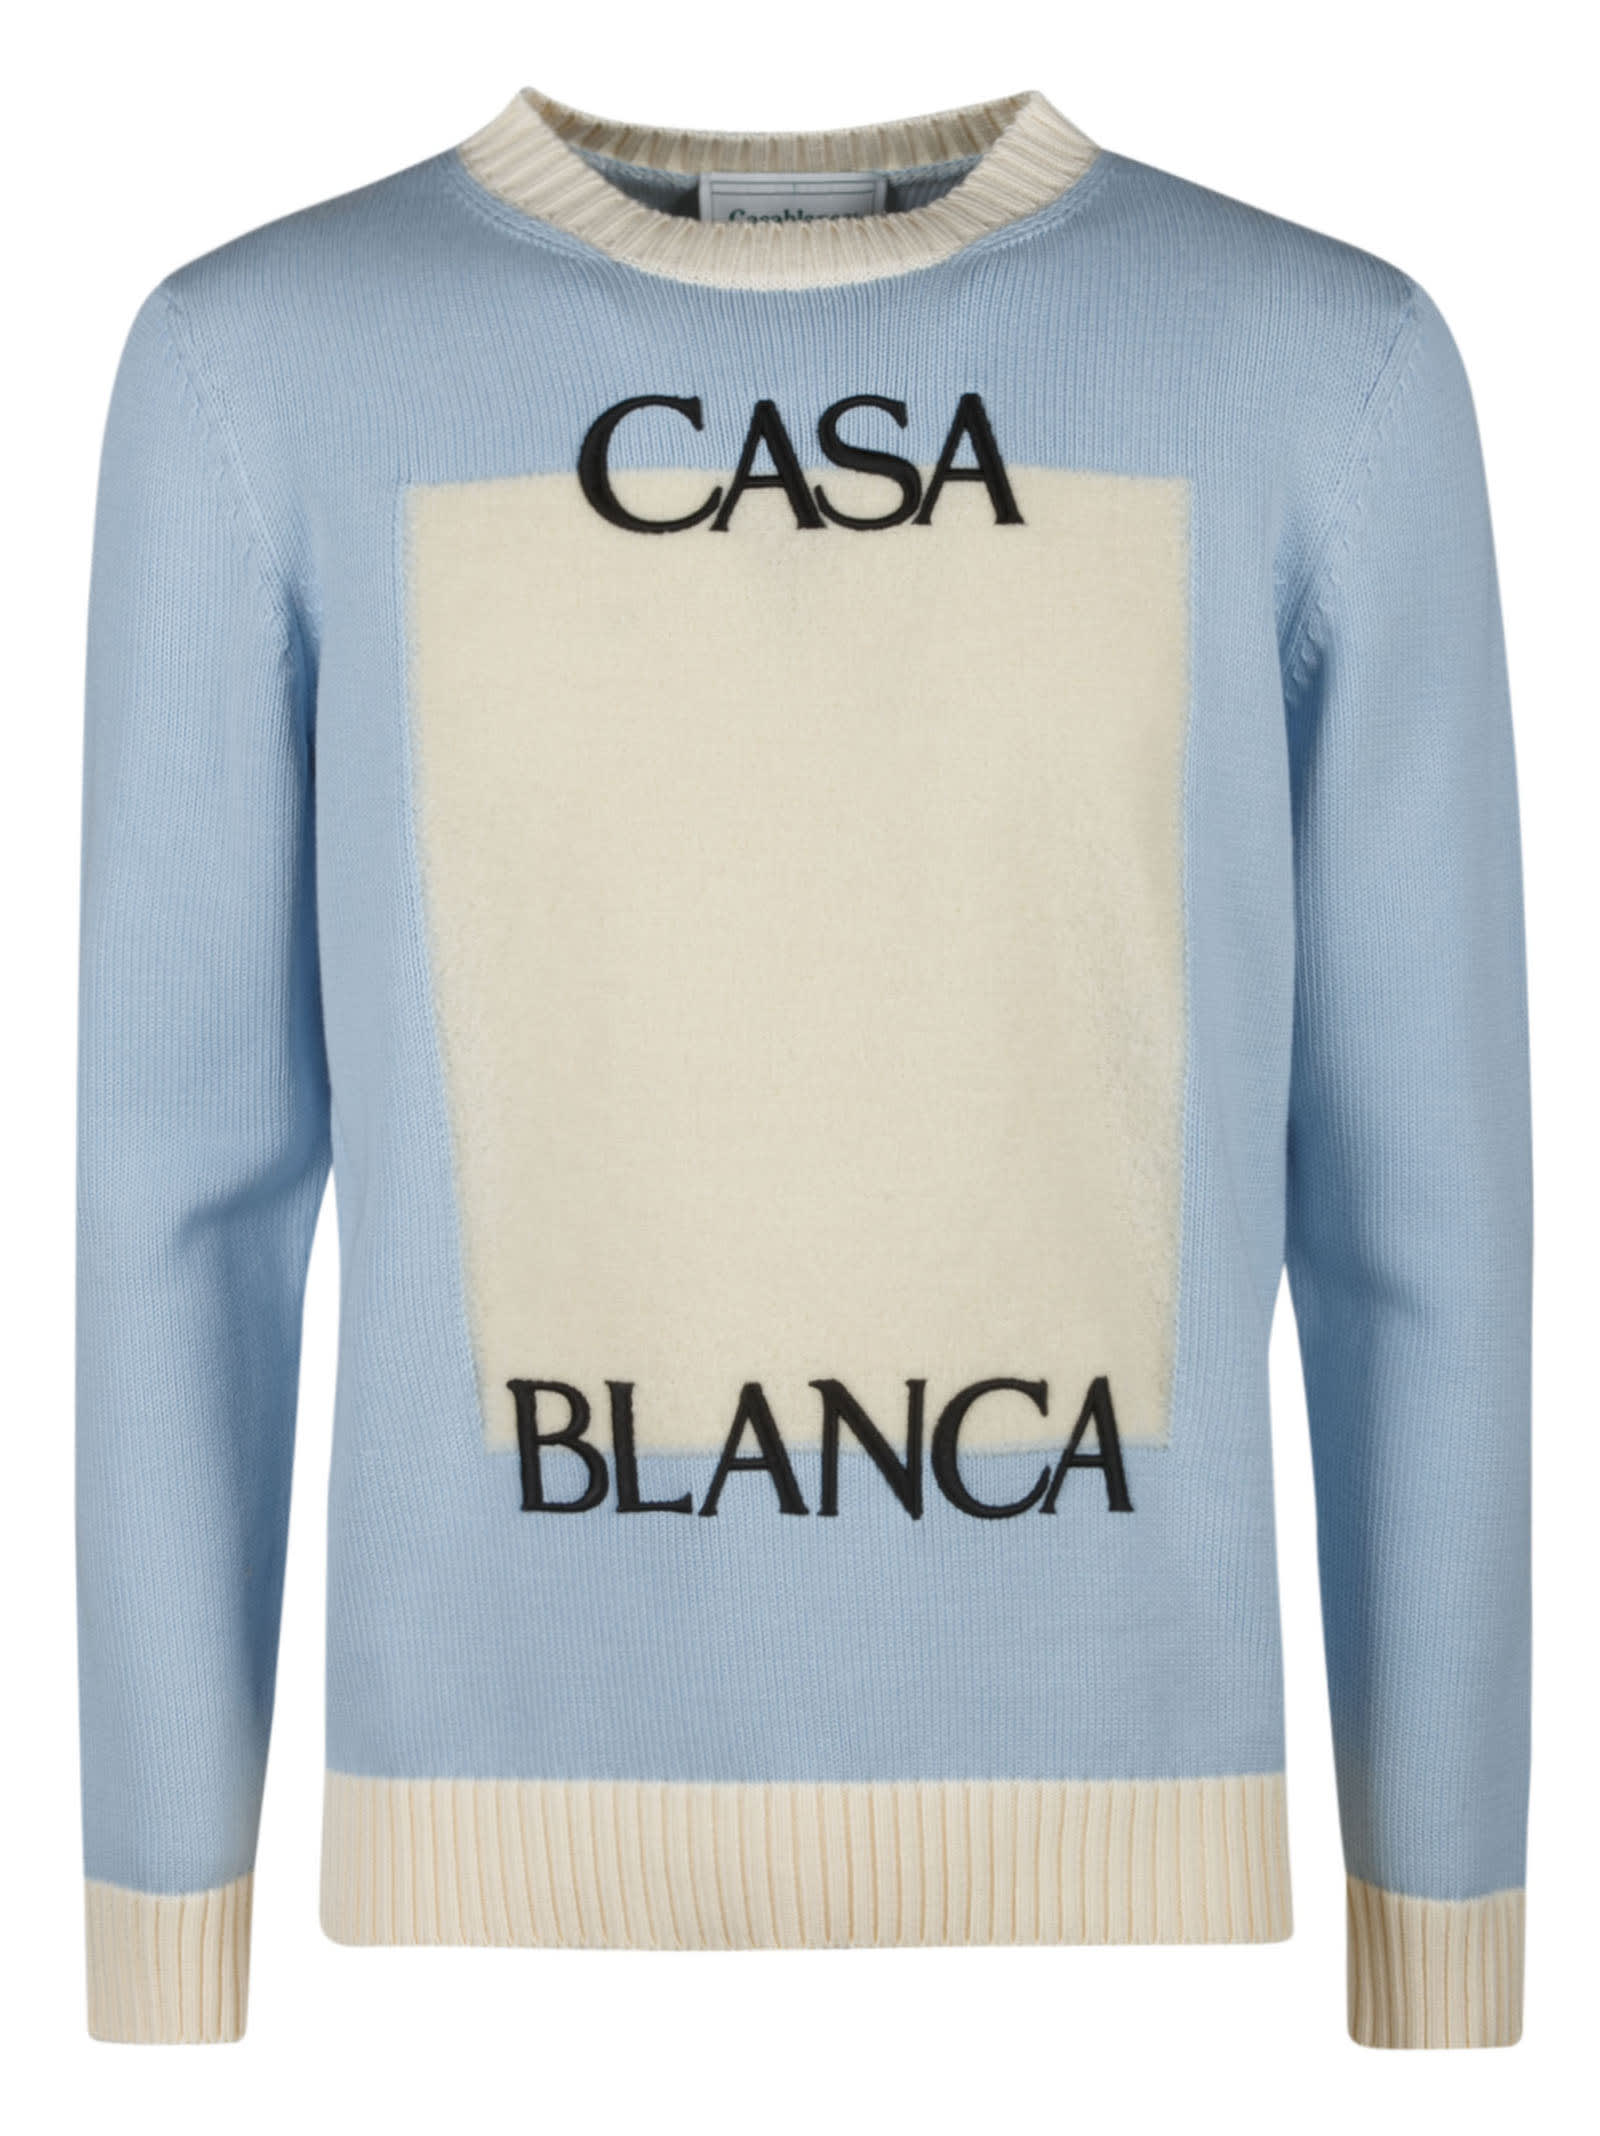 Casablanca Knit Brand Sweater